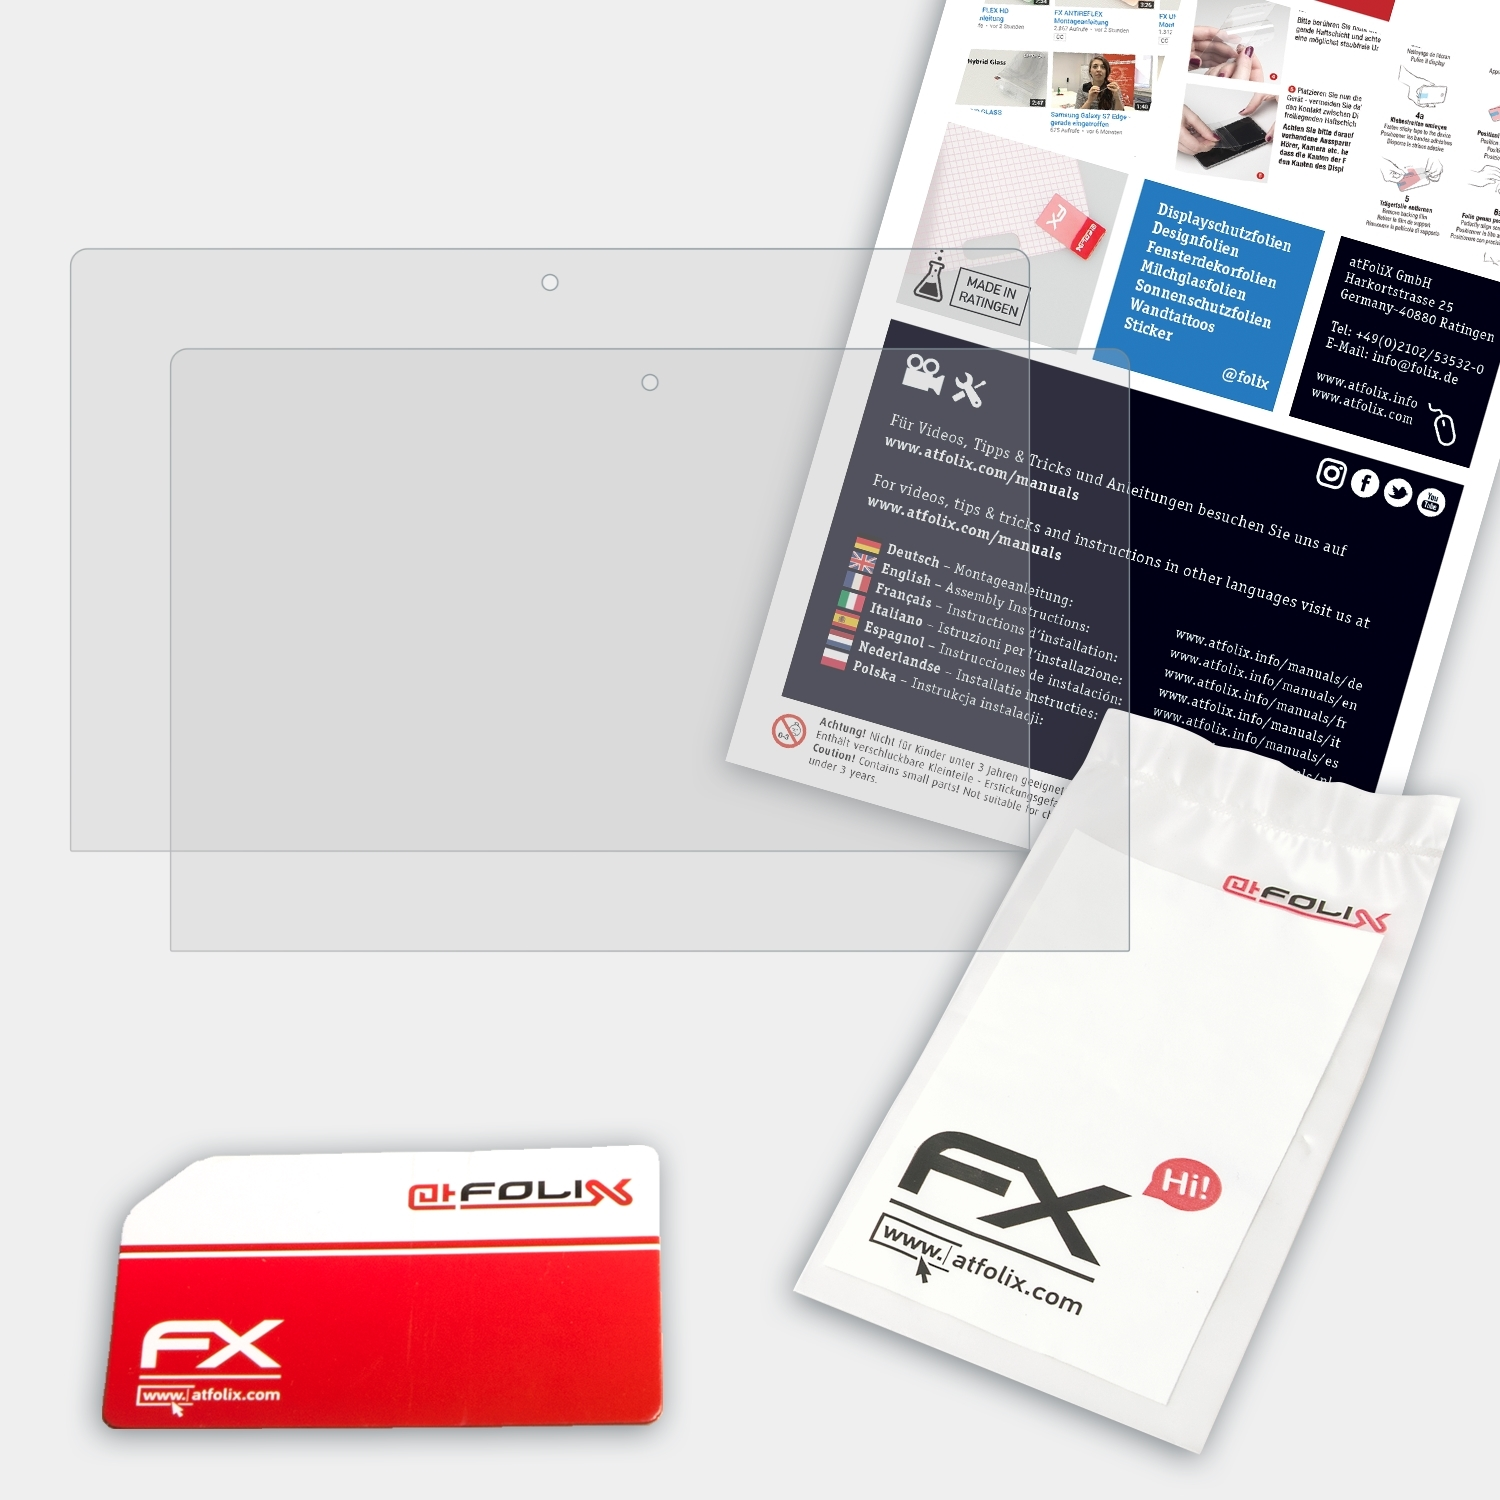 ATFOLIX 2x FX-Antireflex Displayschutz(für Yoga Lenovo 2 11) IdeaPad